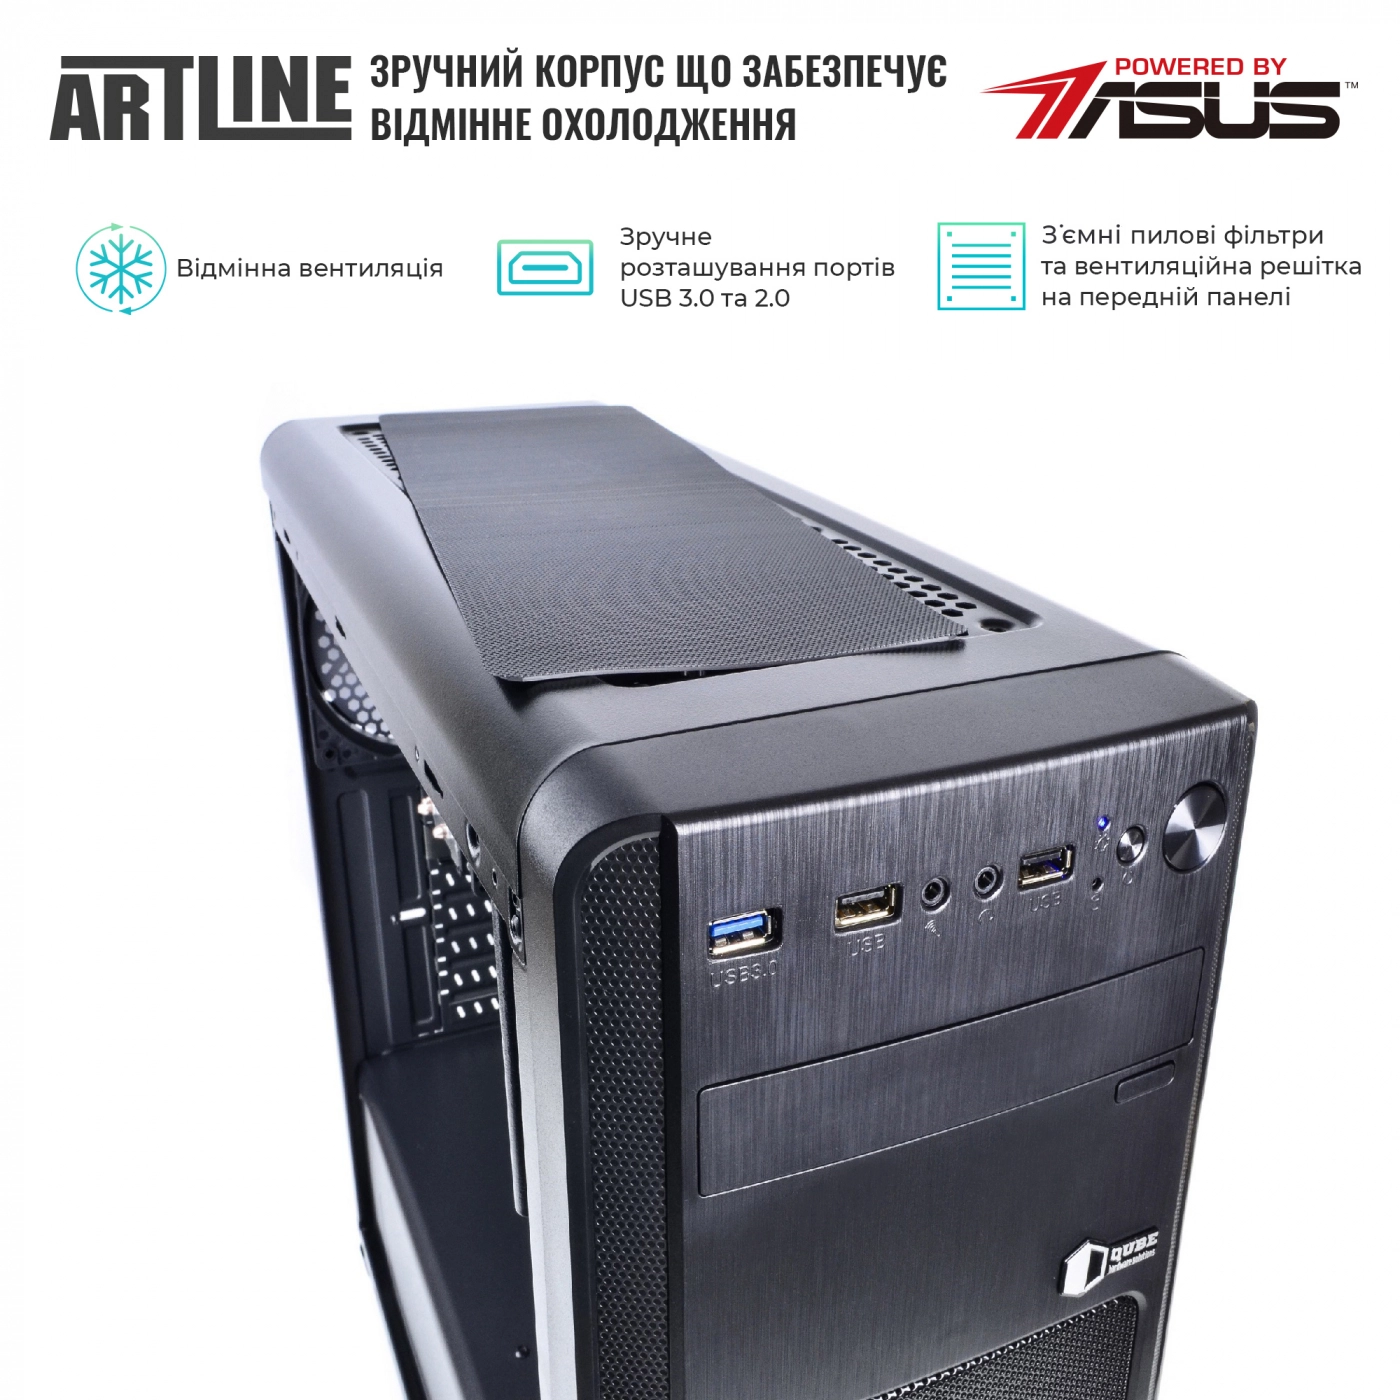 Купити Сервер ARTLINE Business T61v08 - фото 2